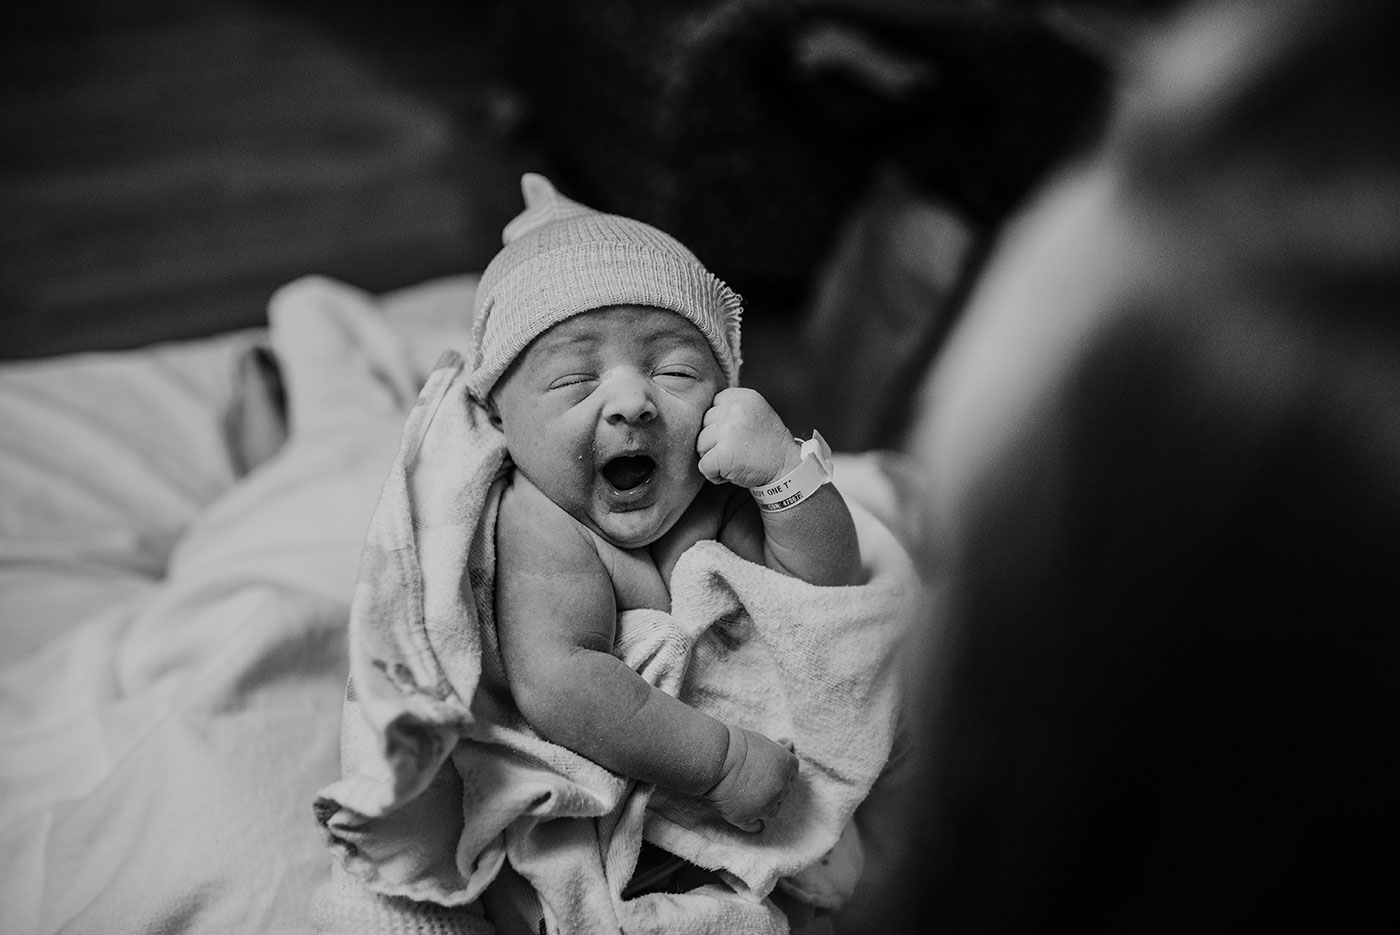 newborn baby boy yawns while mom looks down at him after birth